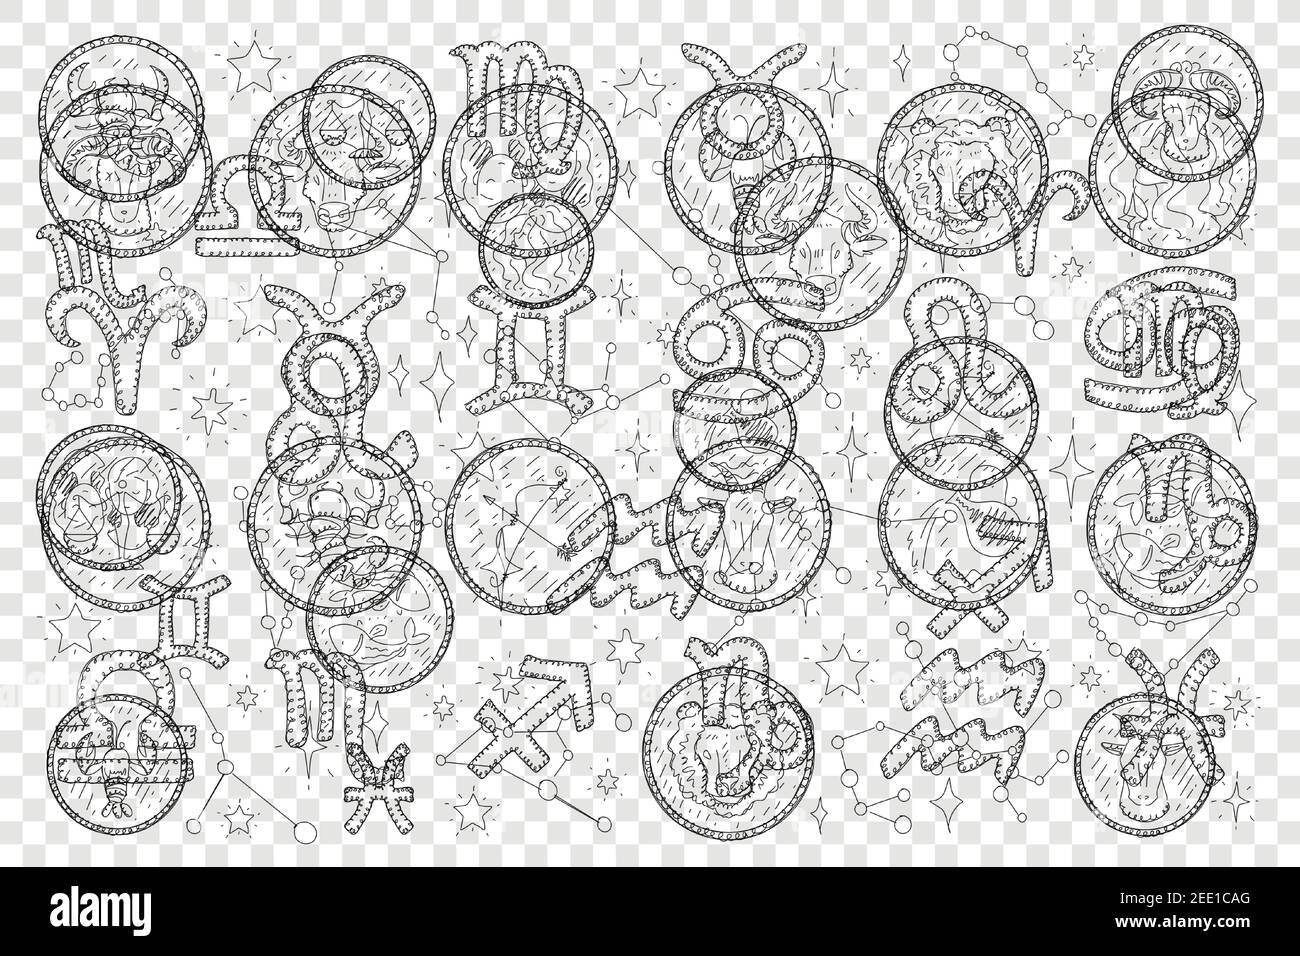 Zodiac signs and moon calendar doodle set. Collection of hand drawn taurus scorpio capricorn gemini aquarius virgo libra constellation sagittarius isolated on transparent background Stock Vector